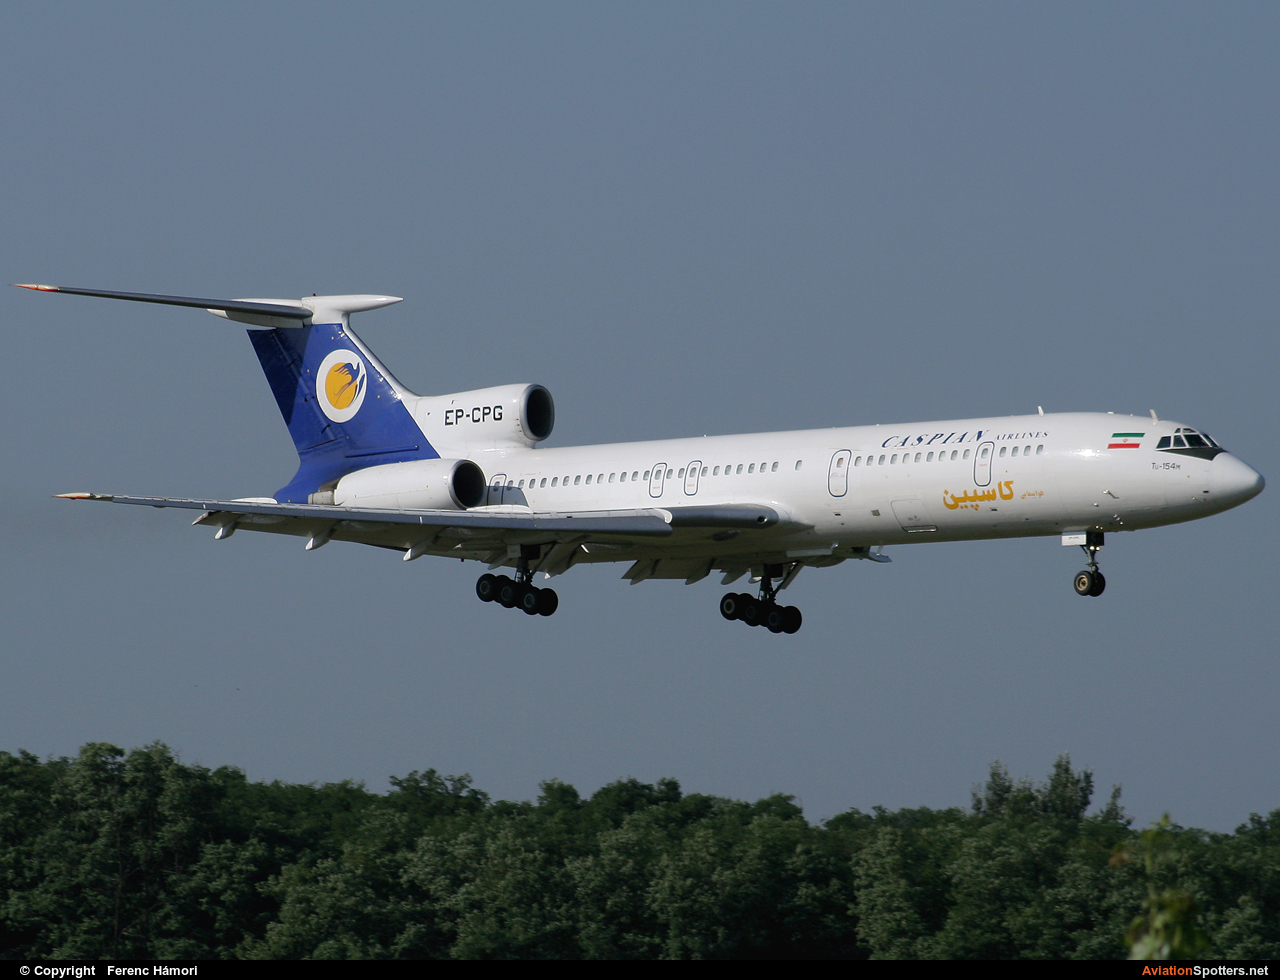 Caspian Airlines  -  Tu-154M  (EP-CPG) By Ferenc Hámori (hamori)